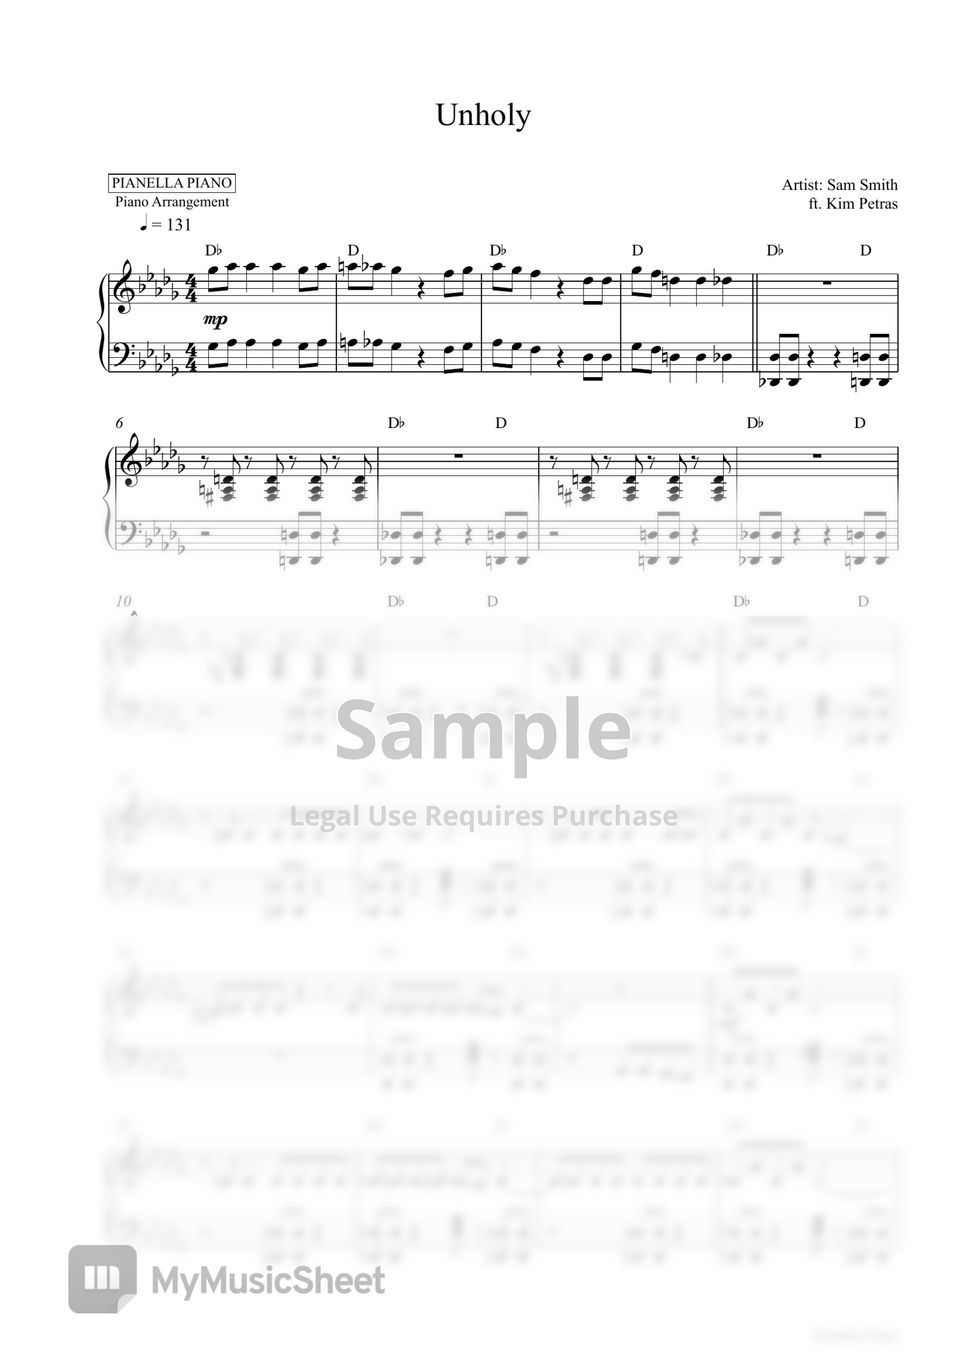 Sam Smith ft. Kim Petras - Unholy (Piano Sheet + Drum Backing Track) by Pianella Piano